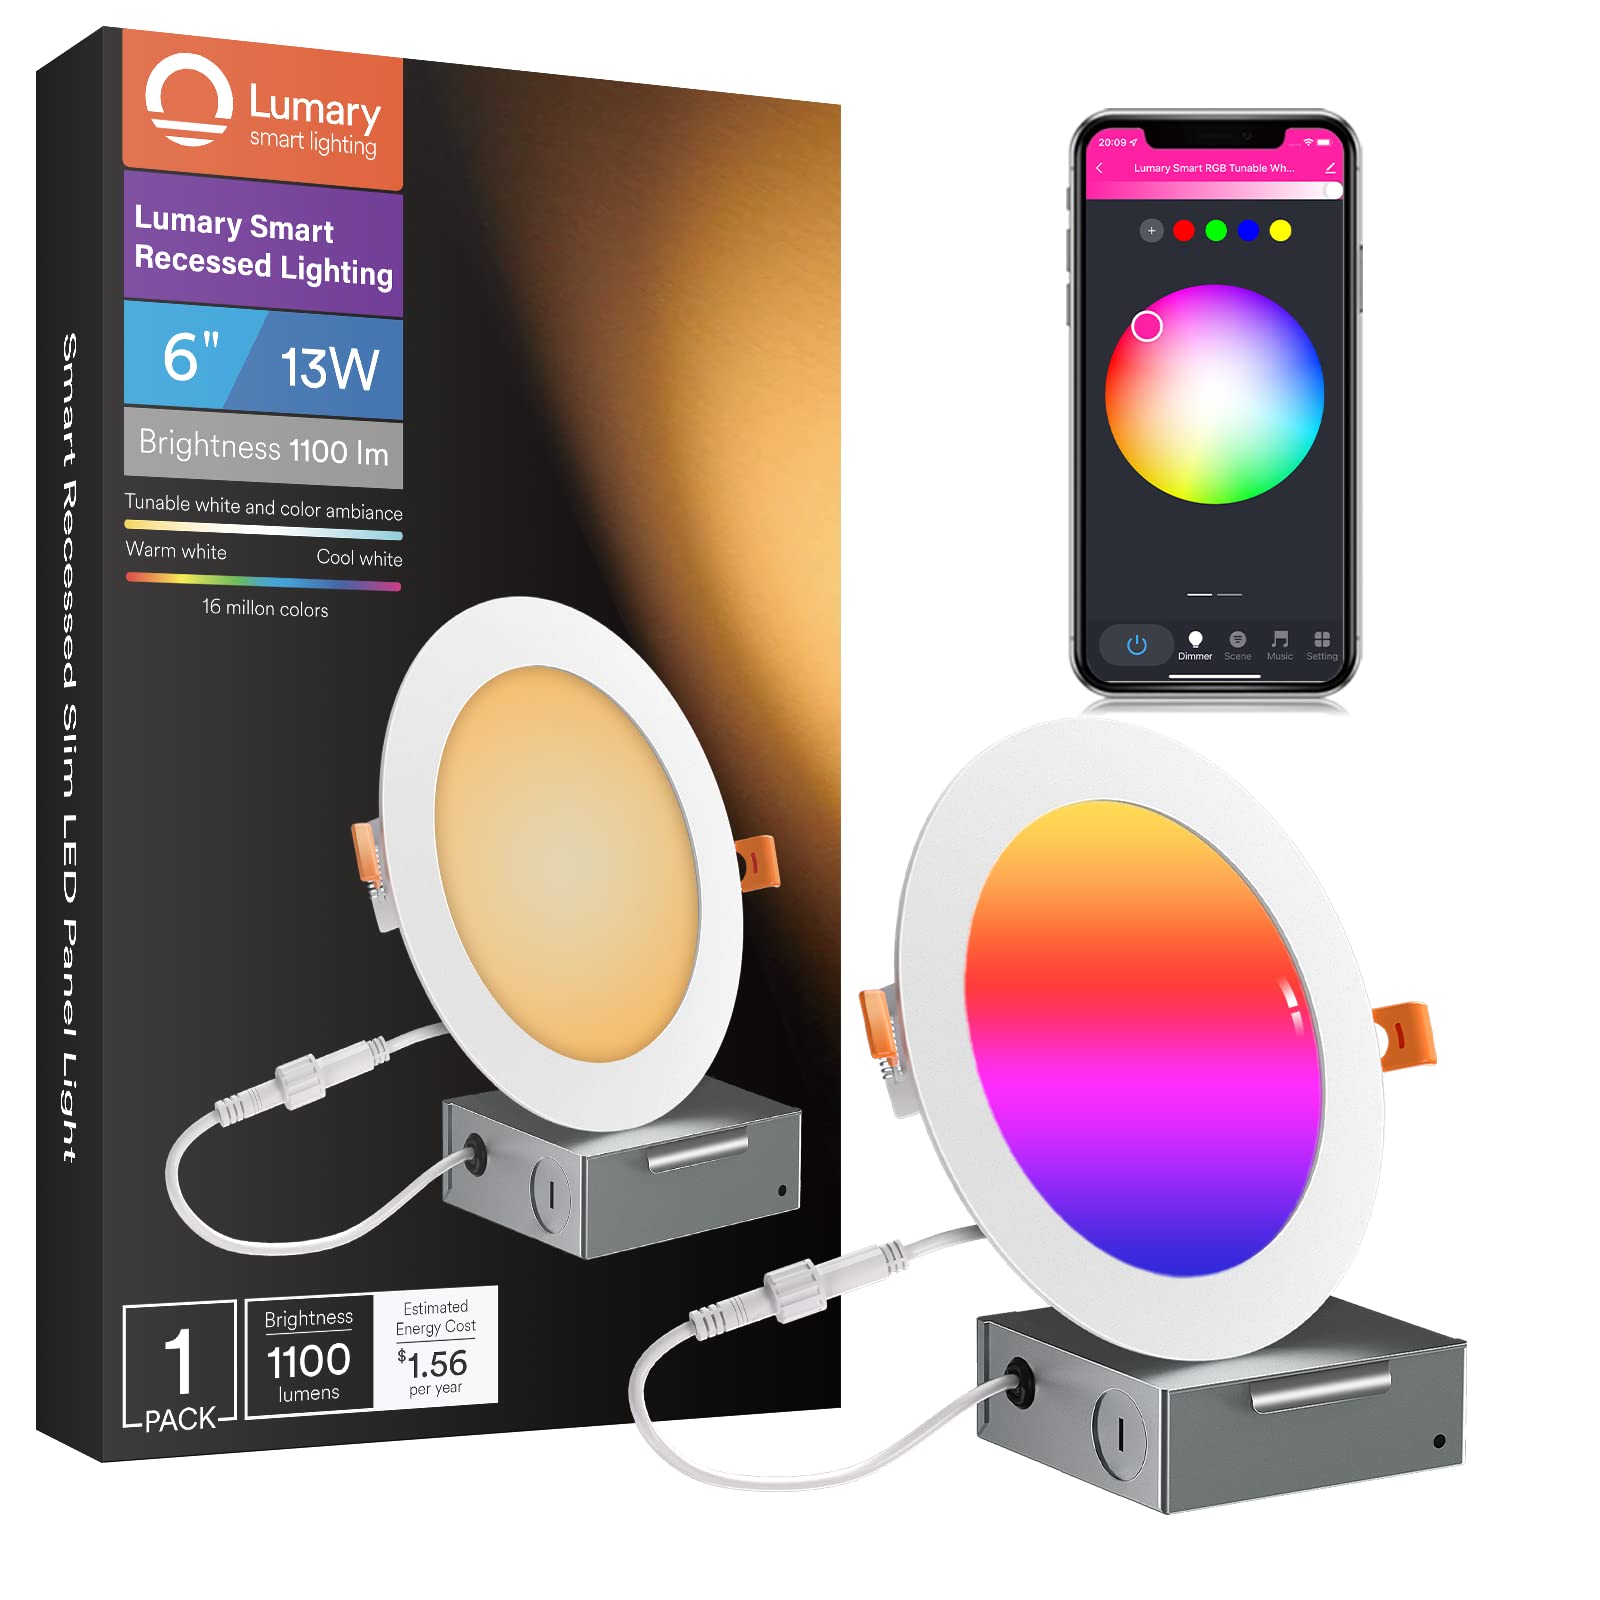 Lumary Zigbee Smart Lighting - Enhance Your Viewing Experience